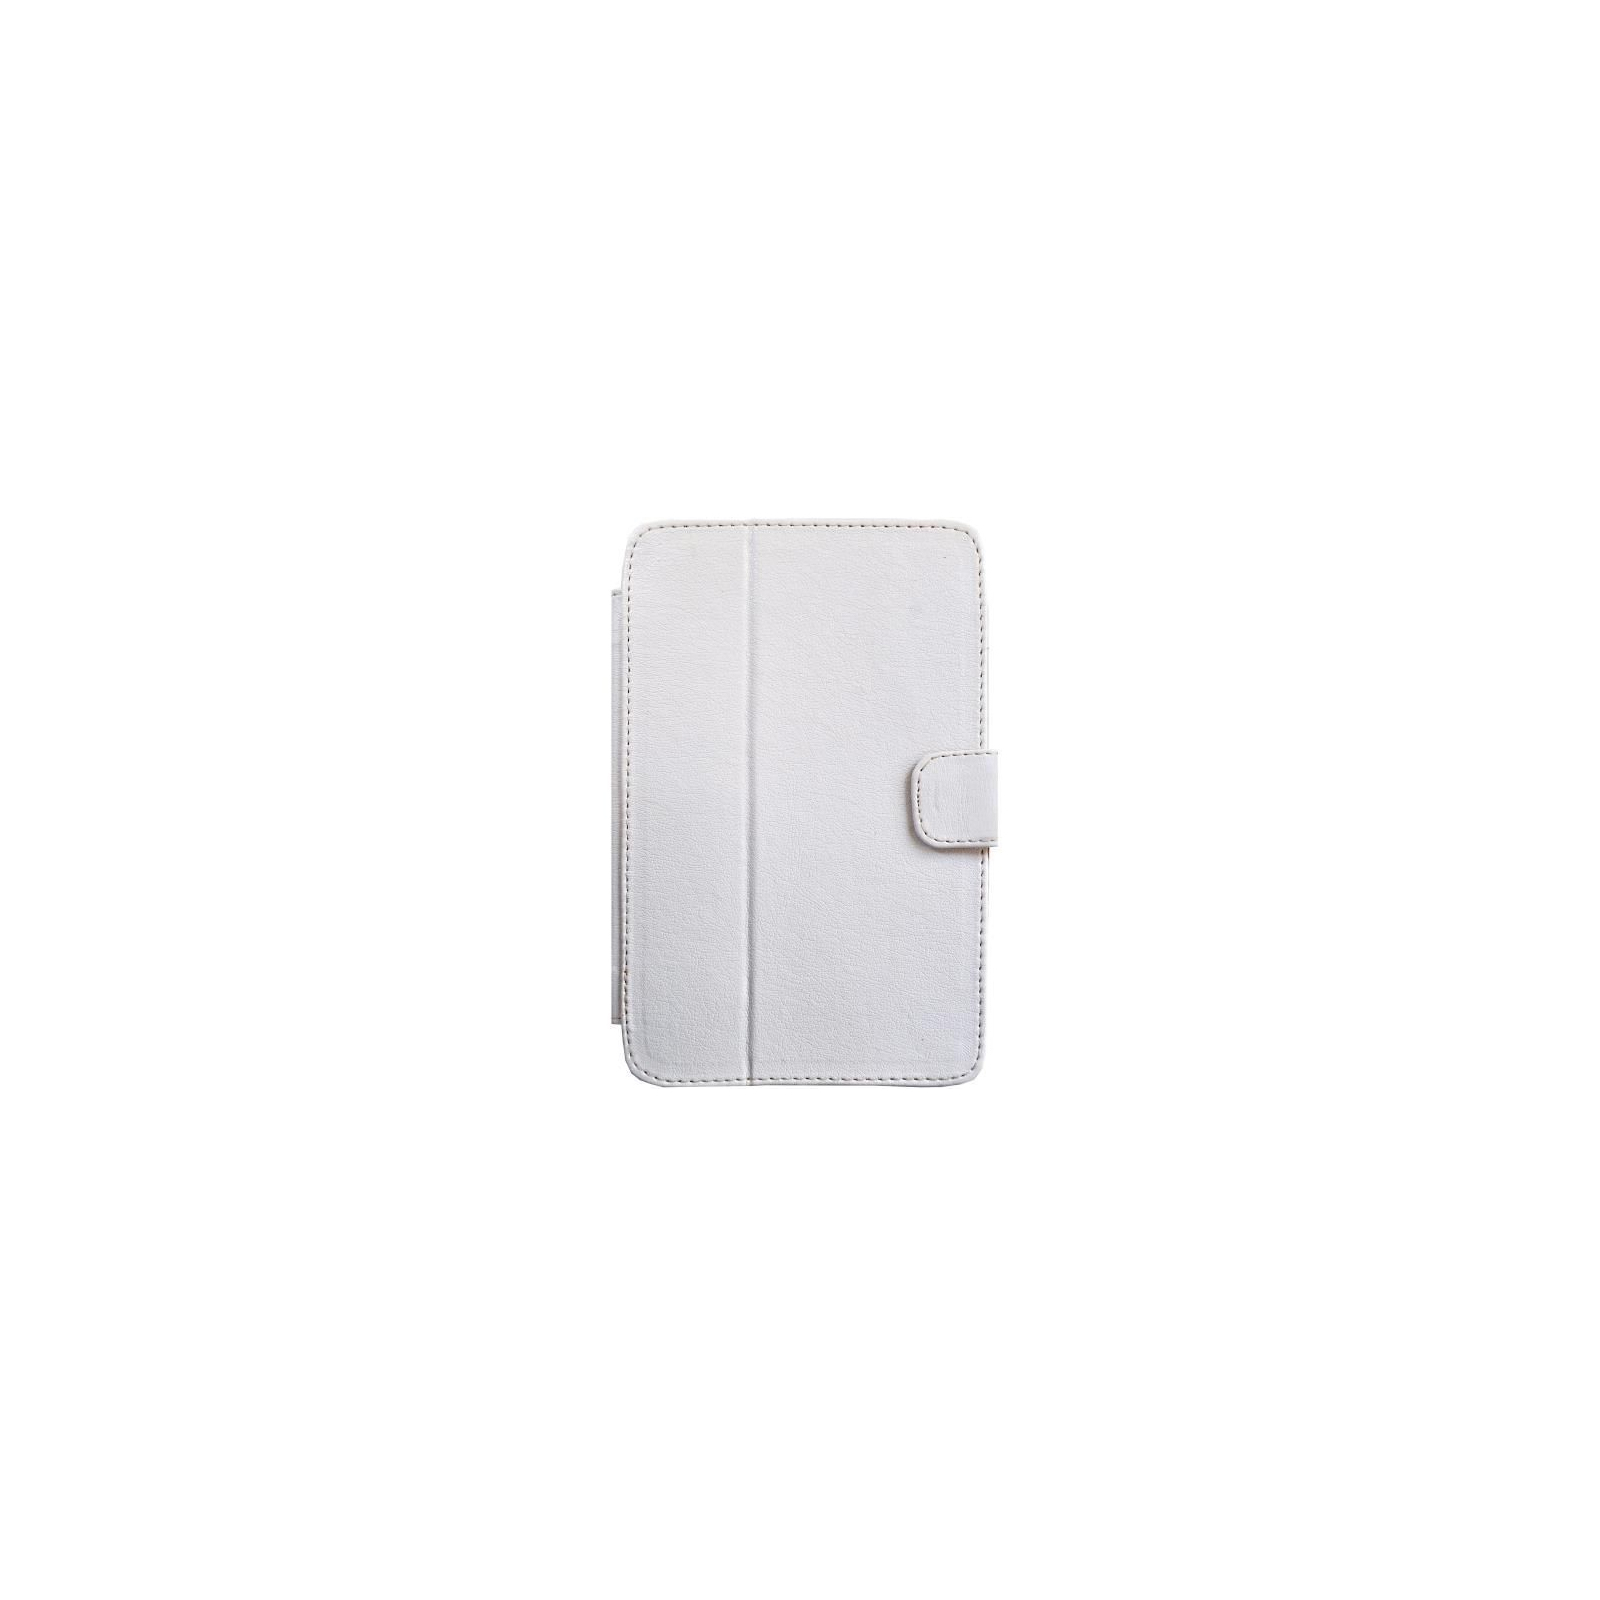 Чехол для планшета Vento 7 COOL - white (07Р021W)